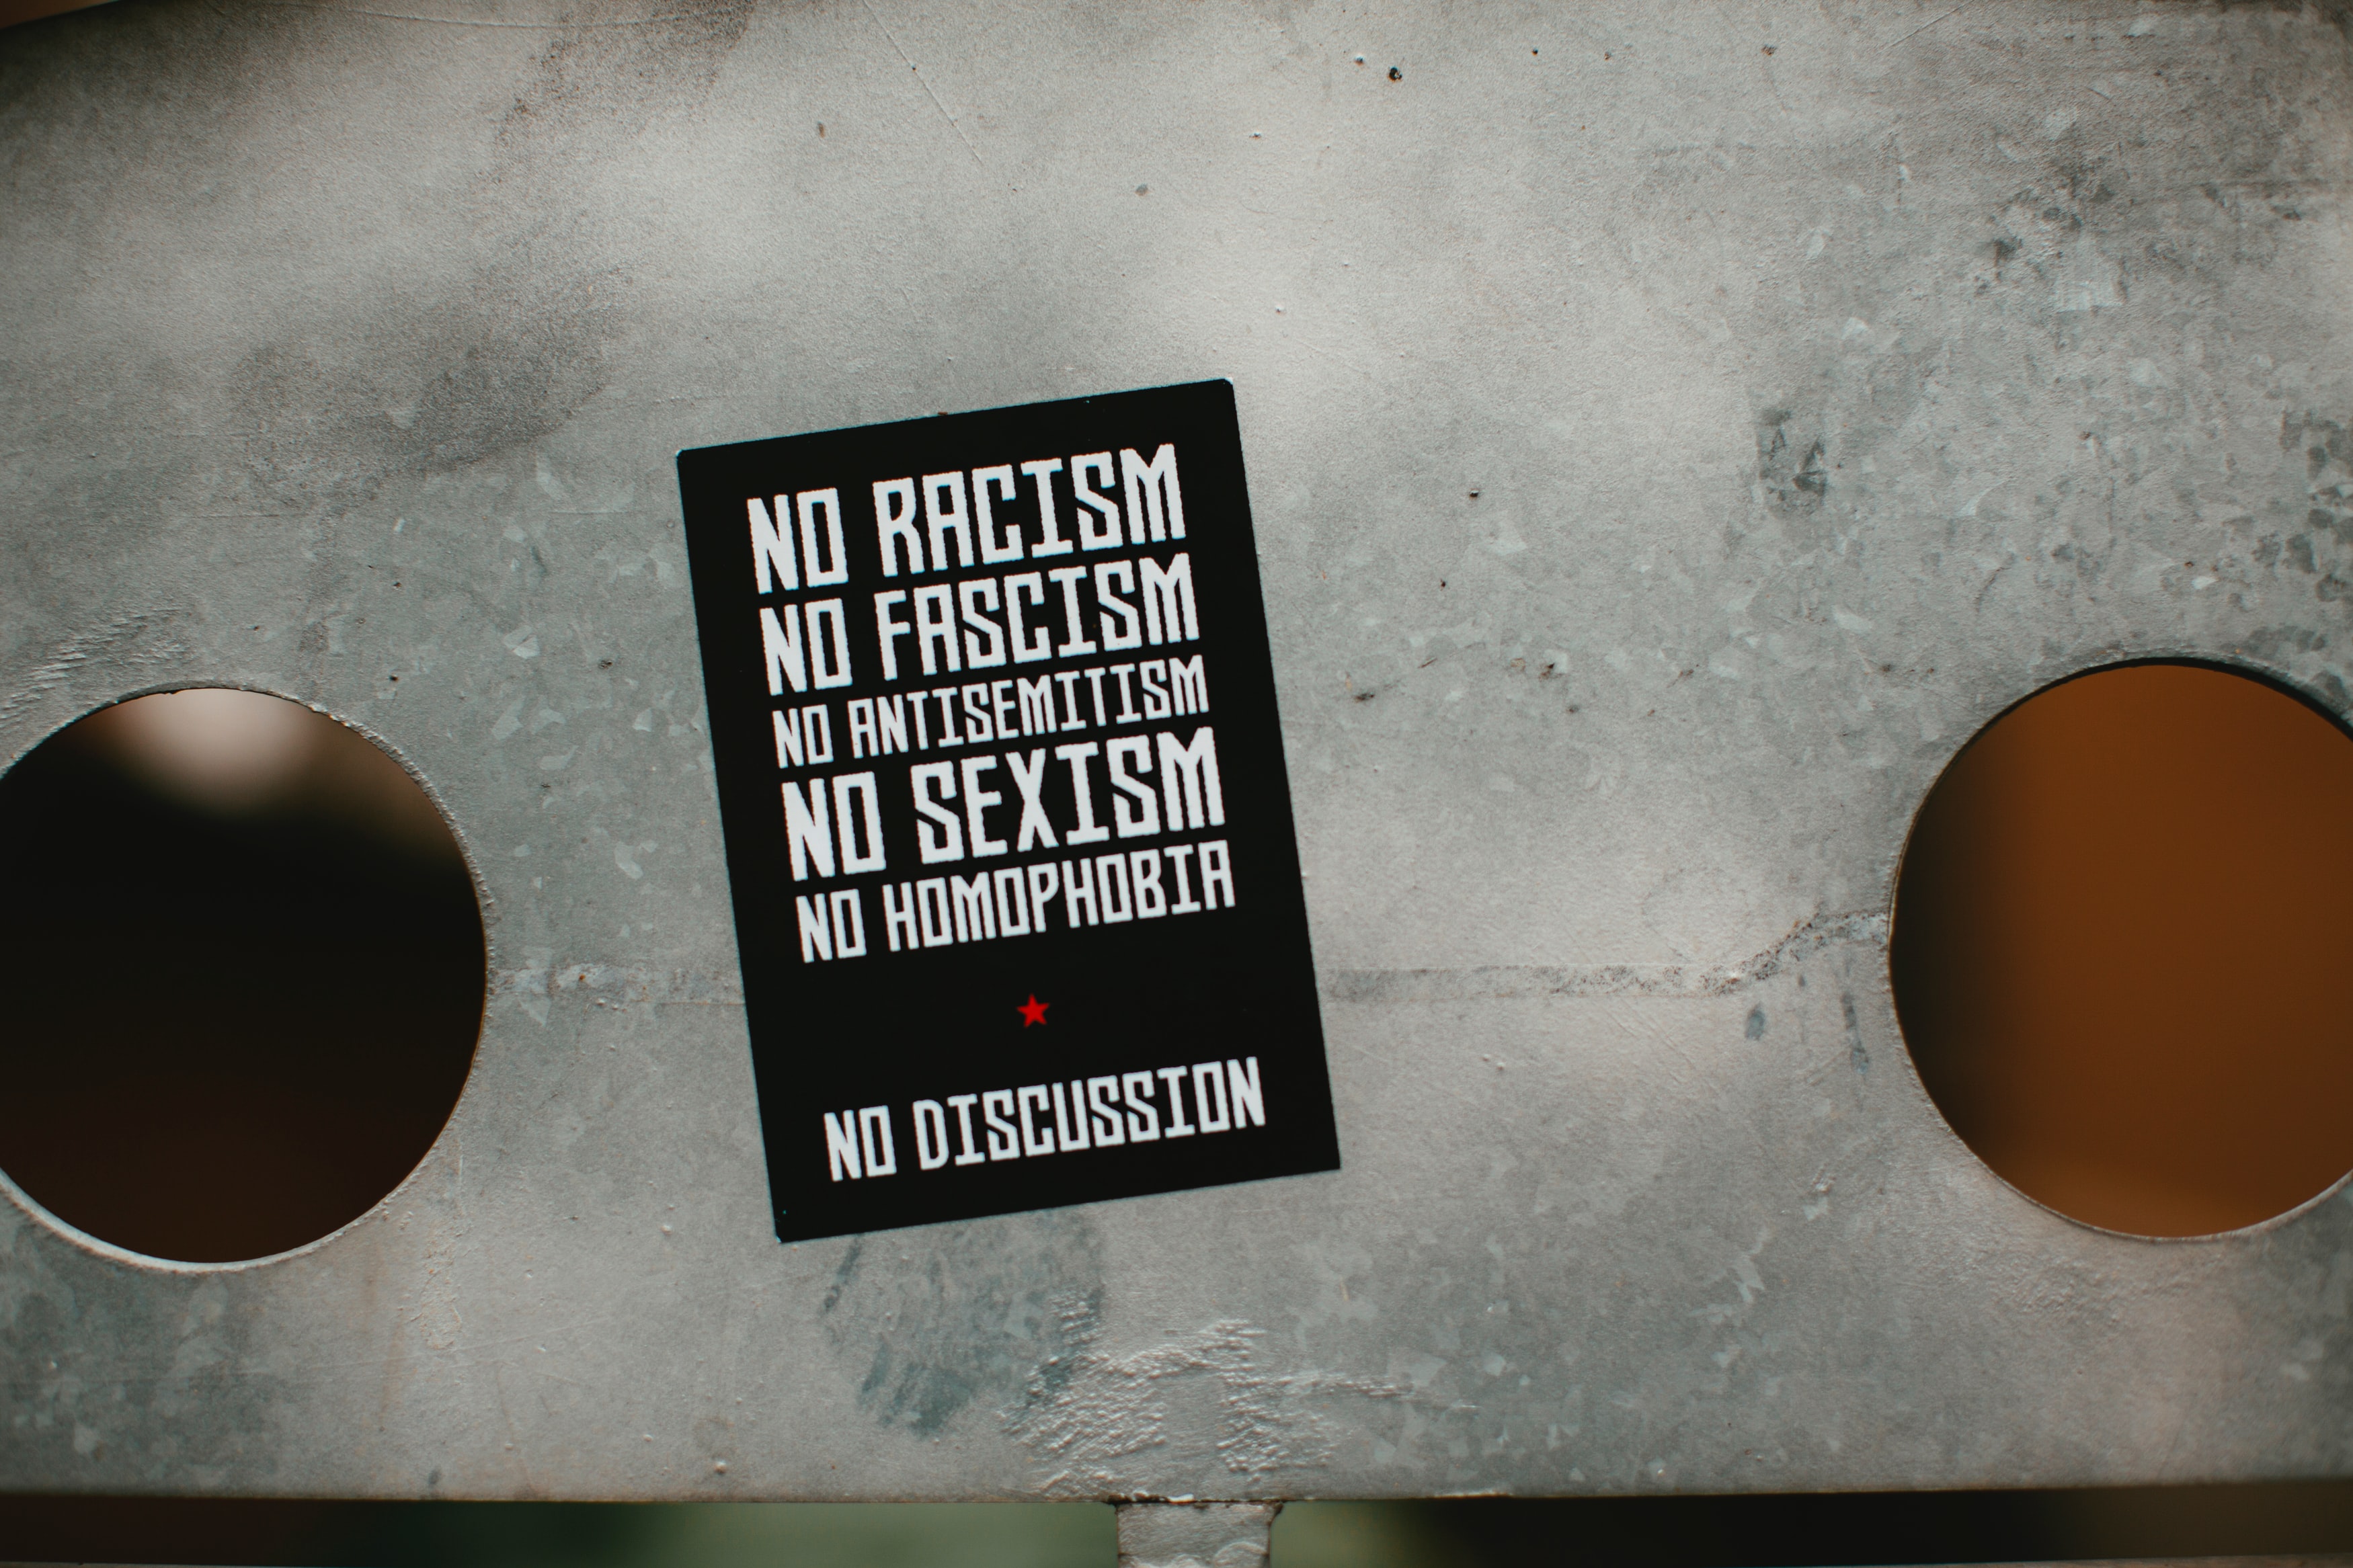 Black card with No Racism, No Facism, No Antisemitism, No Sexism, No Homophobia, No Discussion in white letters; image by Markus Spiske, via Unsplash.com.